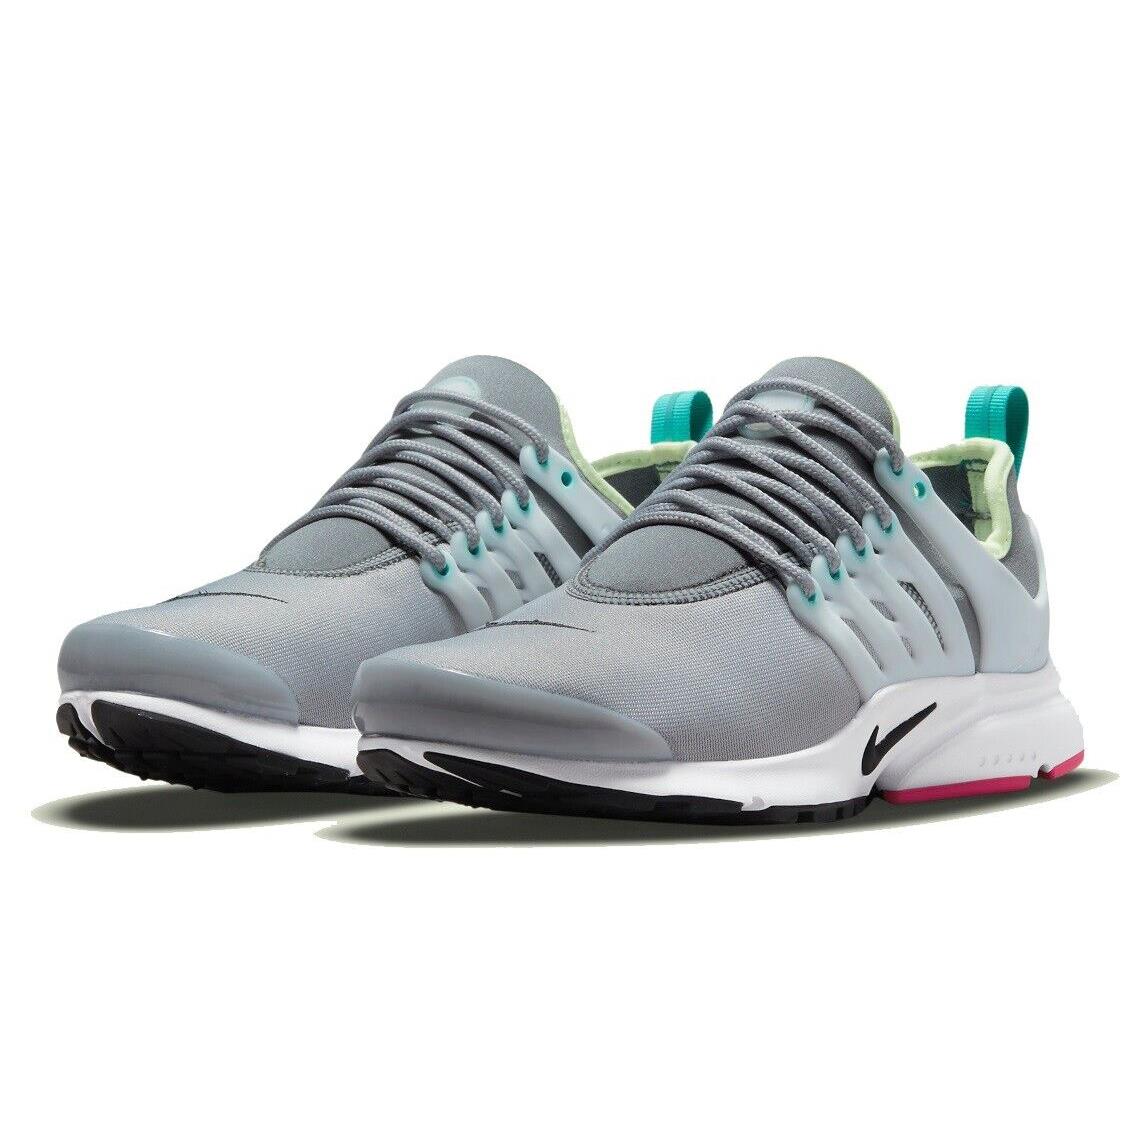 Nike Air Presto Womens Size 11 Sneaker Shoes 878068 018 Cool Grey